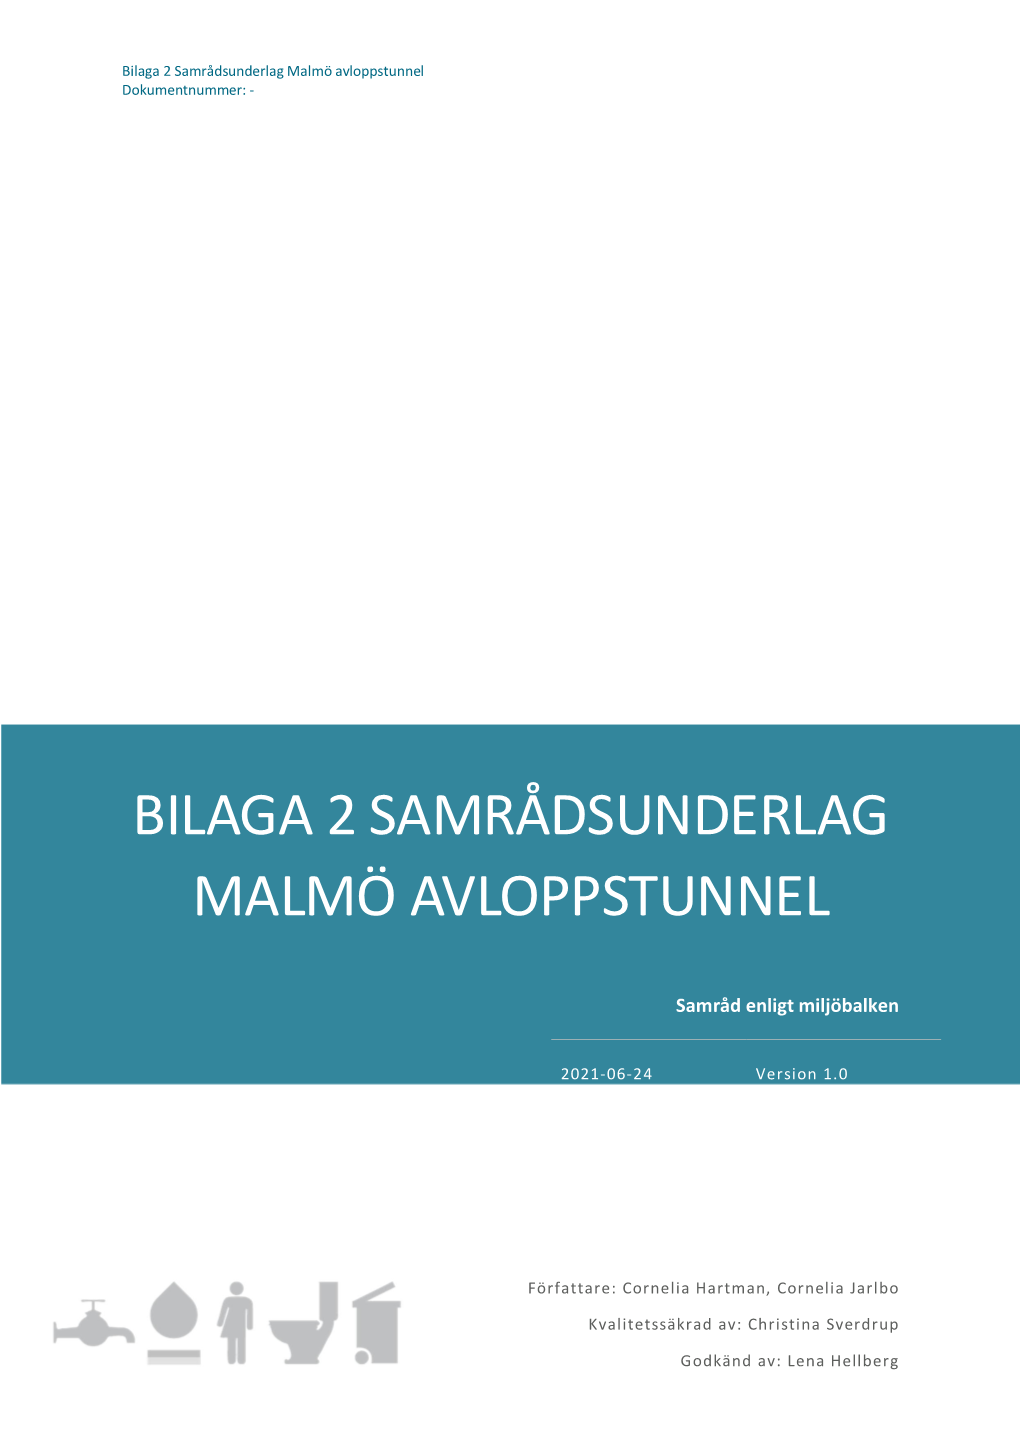 Samrådsunderlag Malmö Avloppstunnel Dokumentnummer: